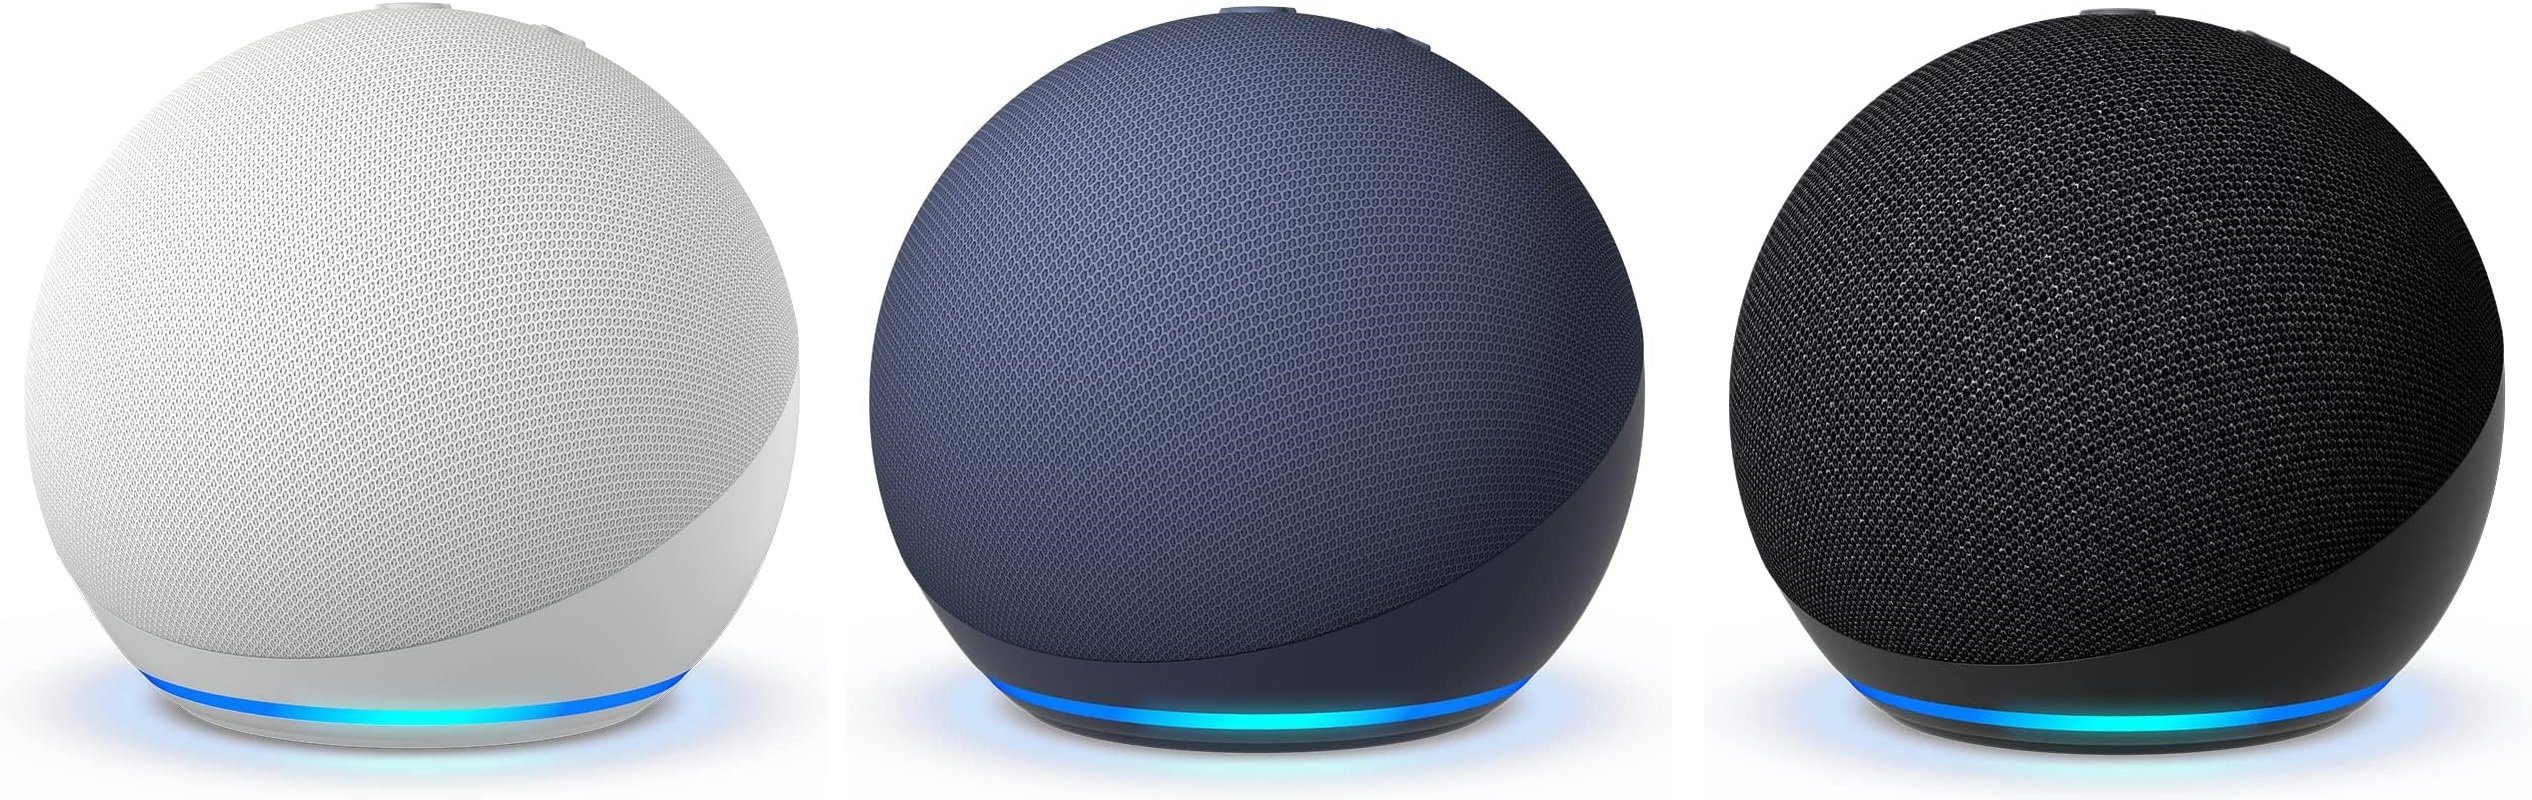 Amazon Echo Dot (5. Generation) Sprachgesteuerter Колонки (WLAN (WiFi), Bluetooth, Alexa Smart Sprachsteuerung)